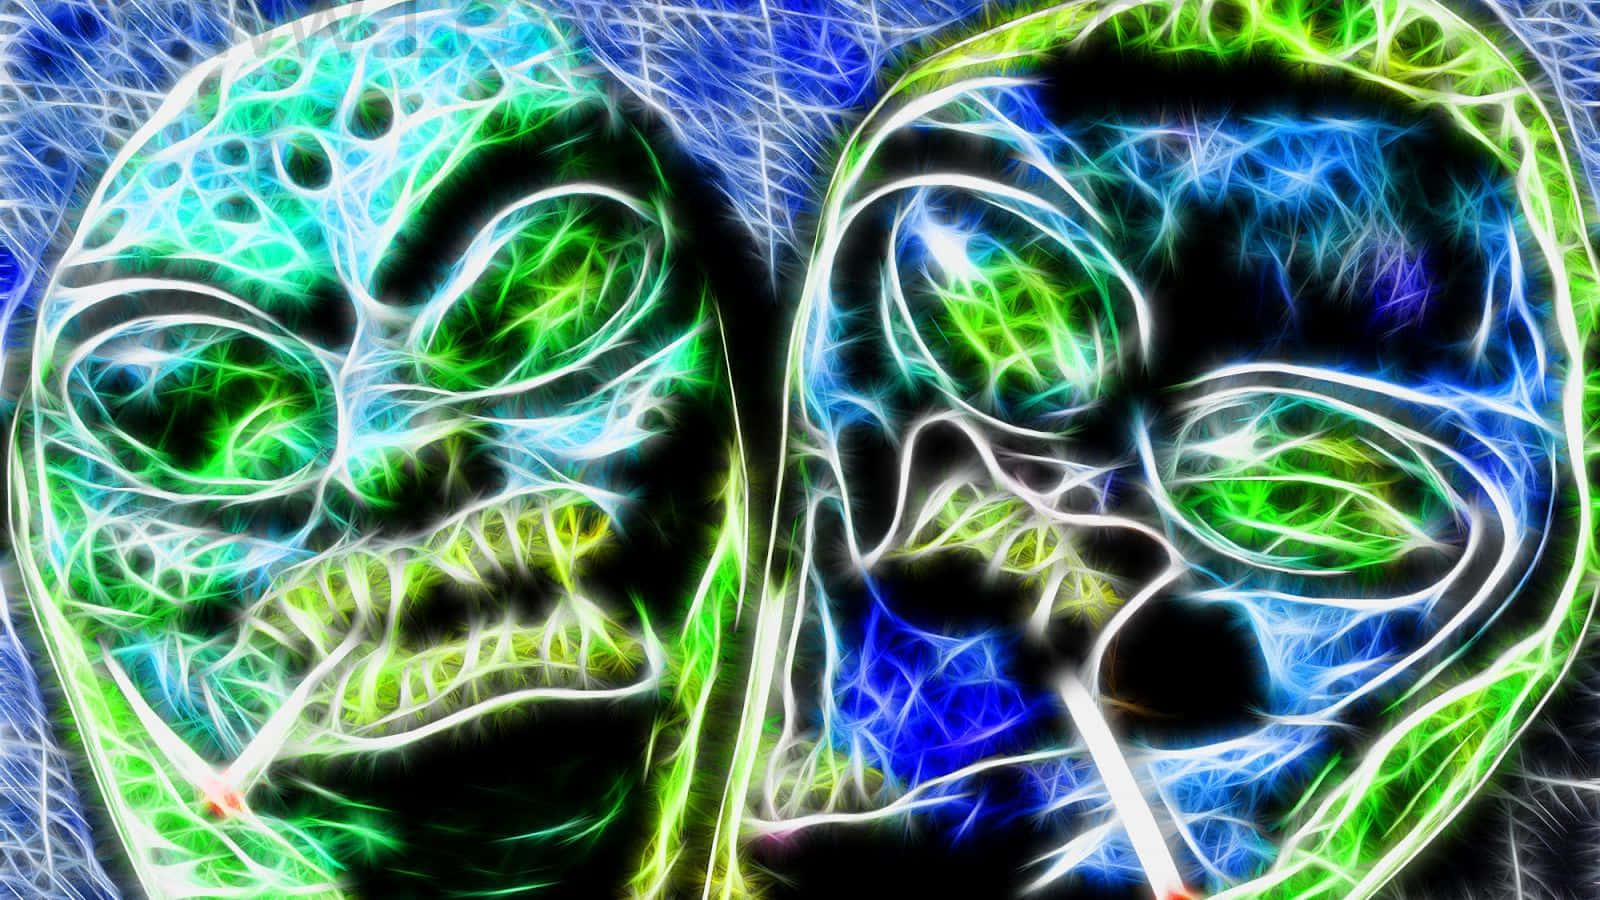 Dazzling Psychedelic Neon Lights in a Dark Room Wallpaper